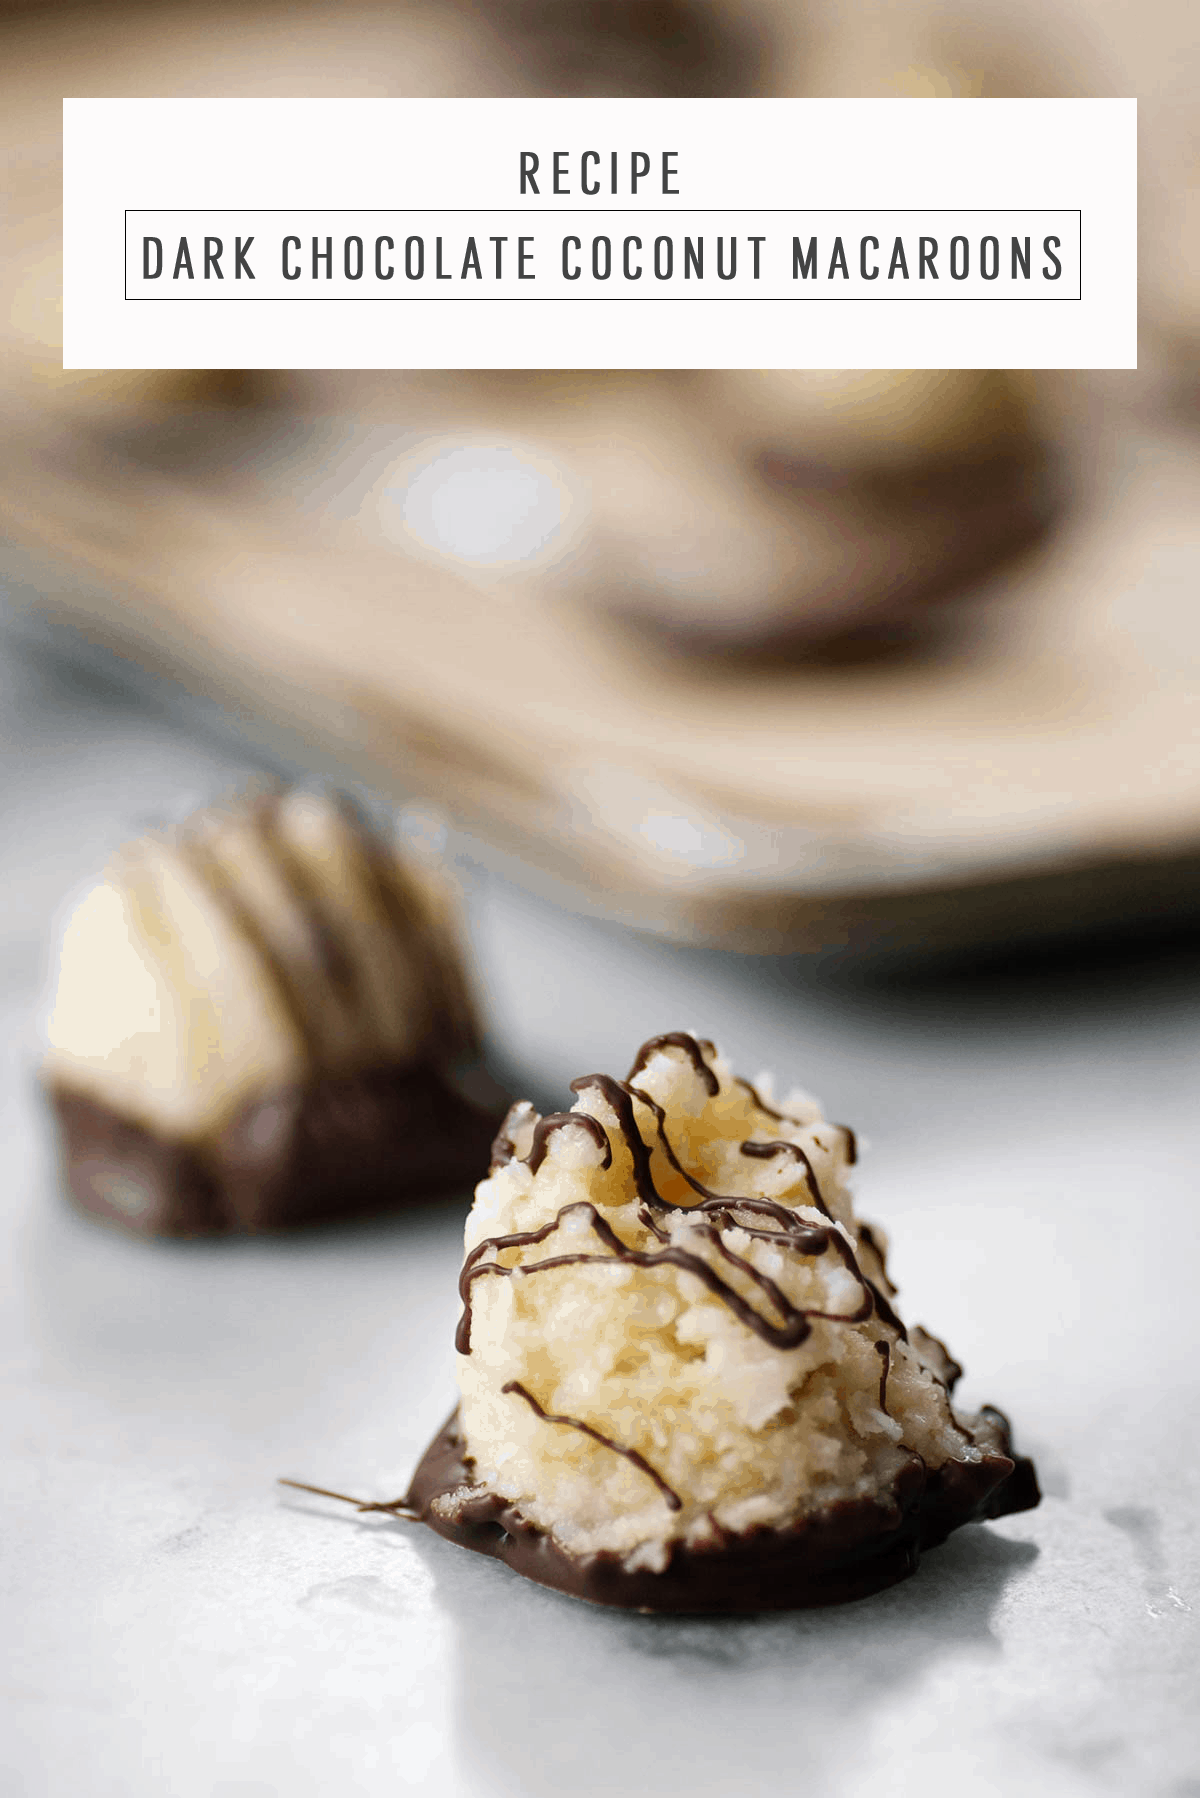 Dark Chocolate Coconut Macaroons recipe by Sugar & Cloth, an award winning DIY and lifestyle blog.